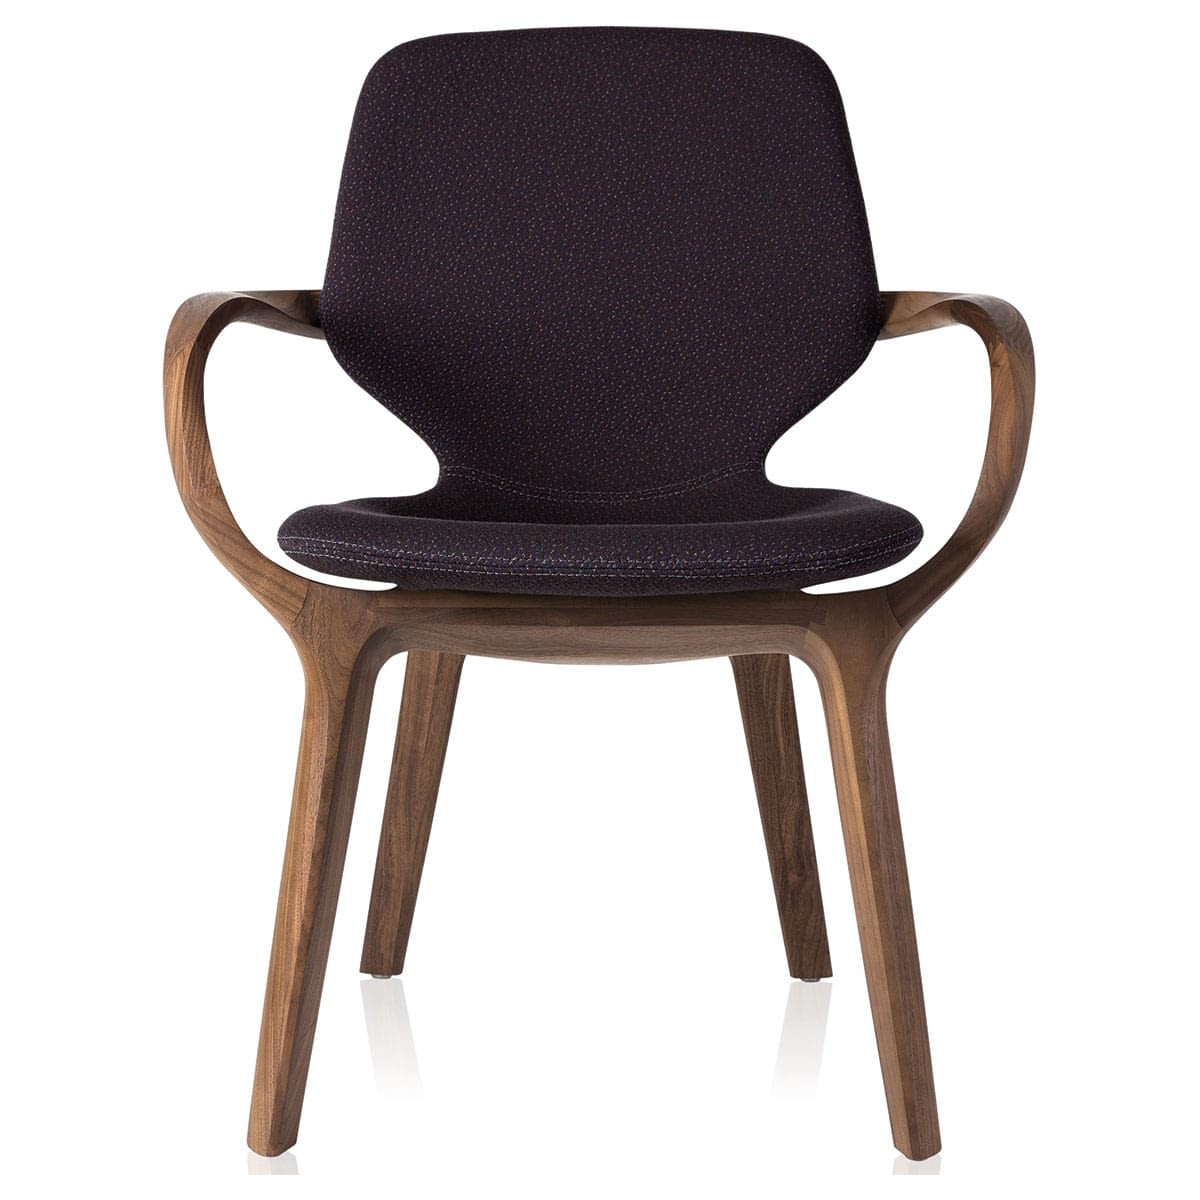 Designer Jader Almeidal Design Mia Chair